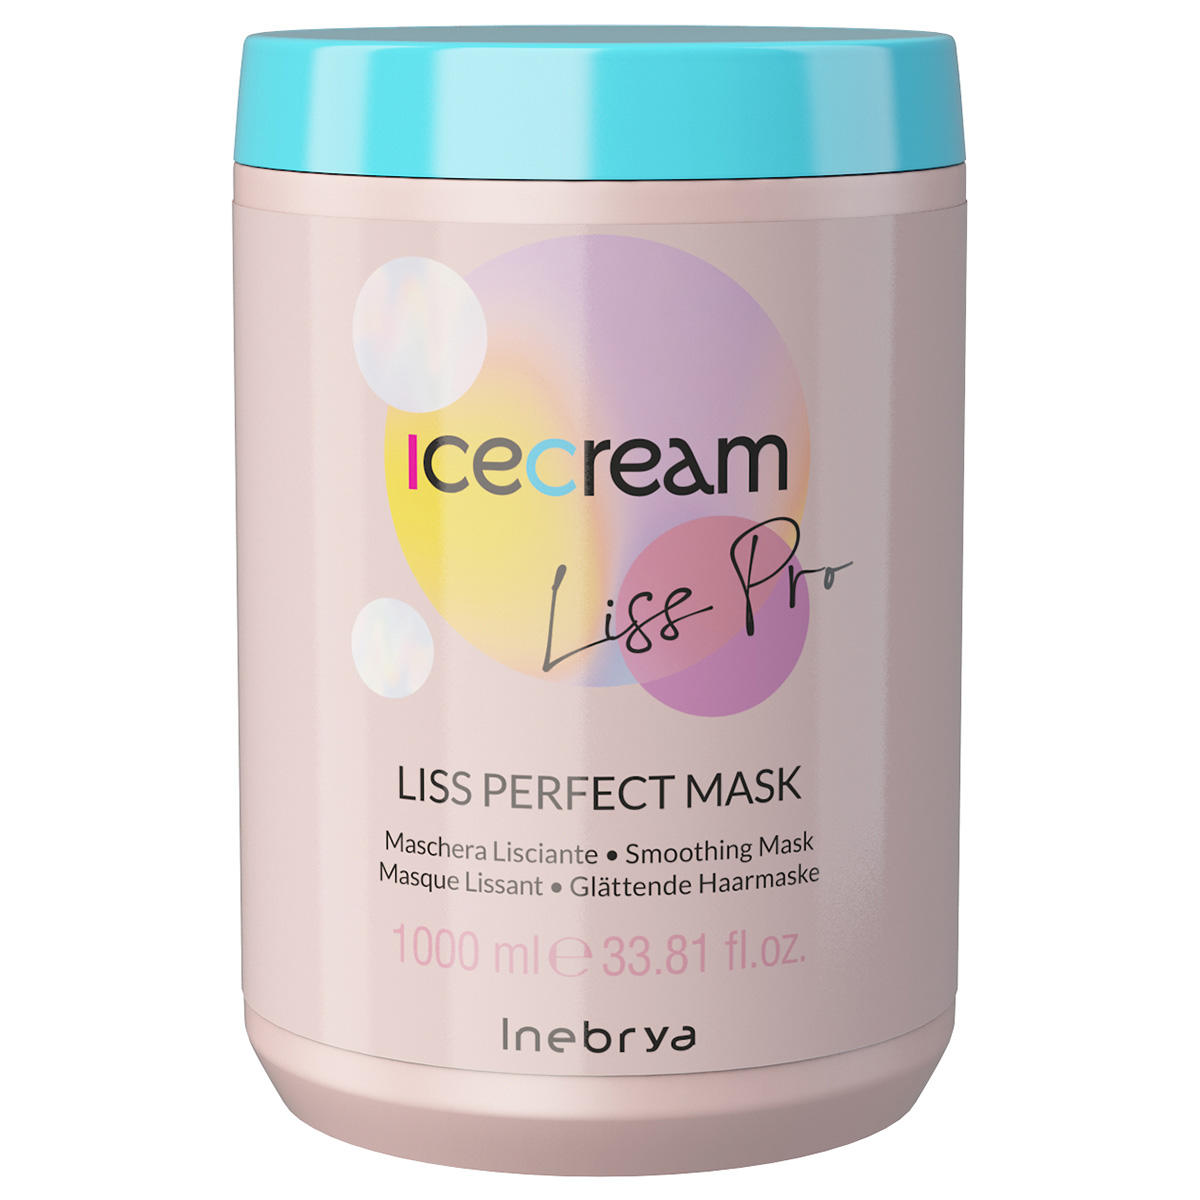 Inebrya Ice Cream Liss-Pro Liss Perfect Mask 1 litro